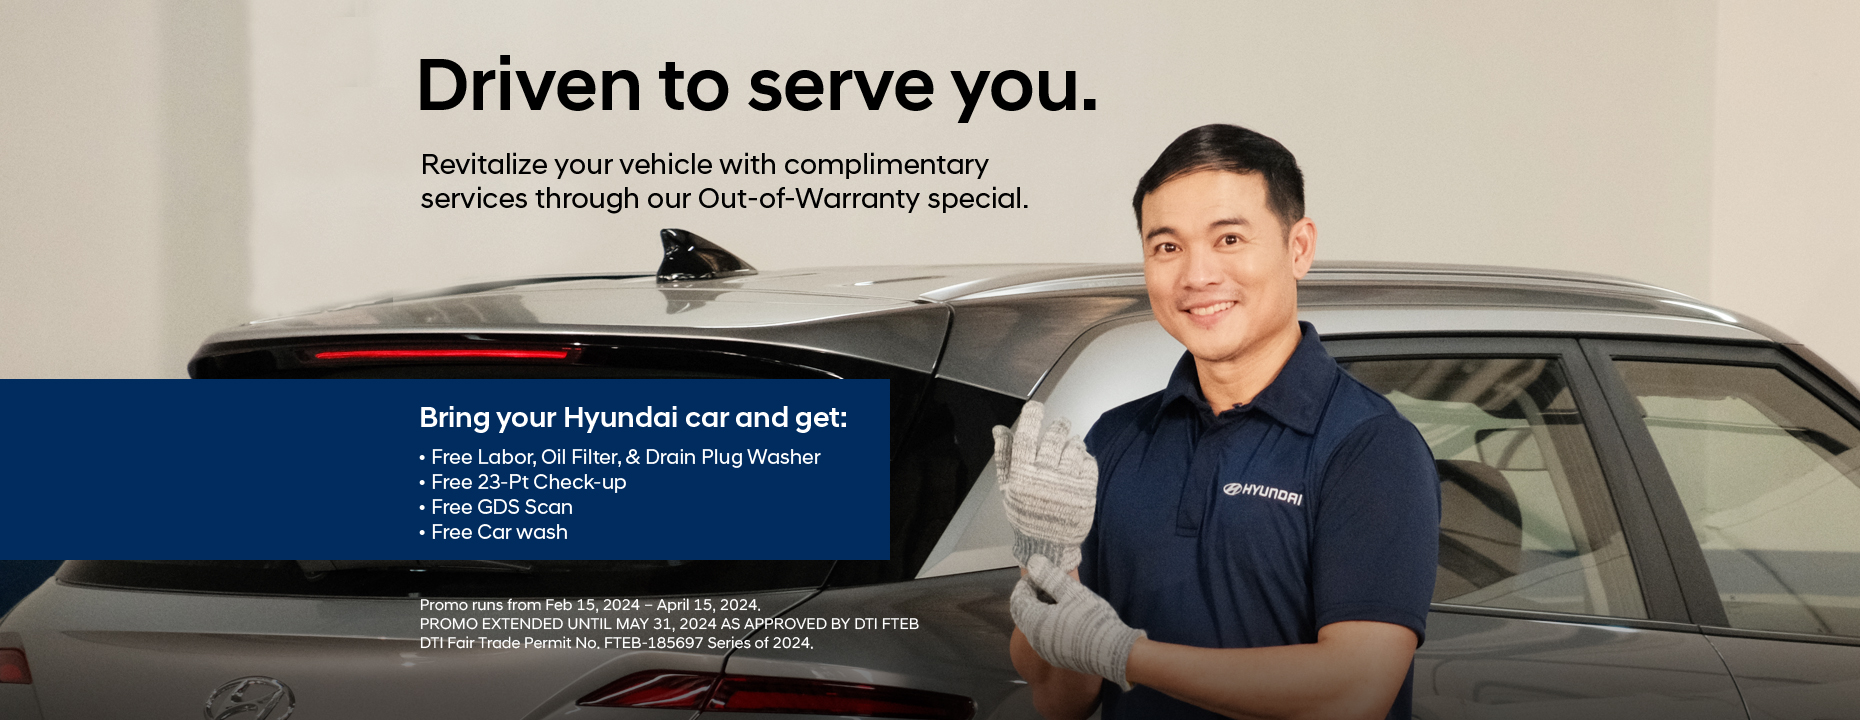 image of a Hyundai Service Consultant